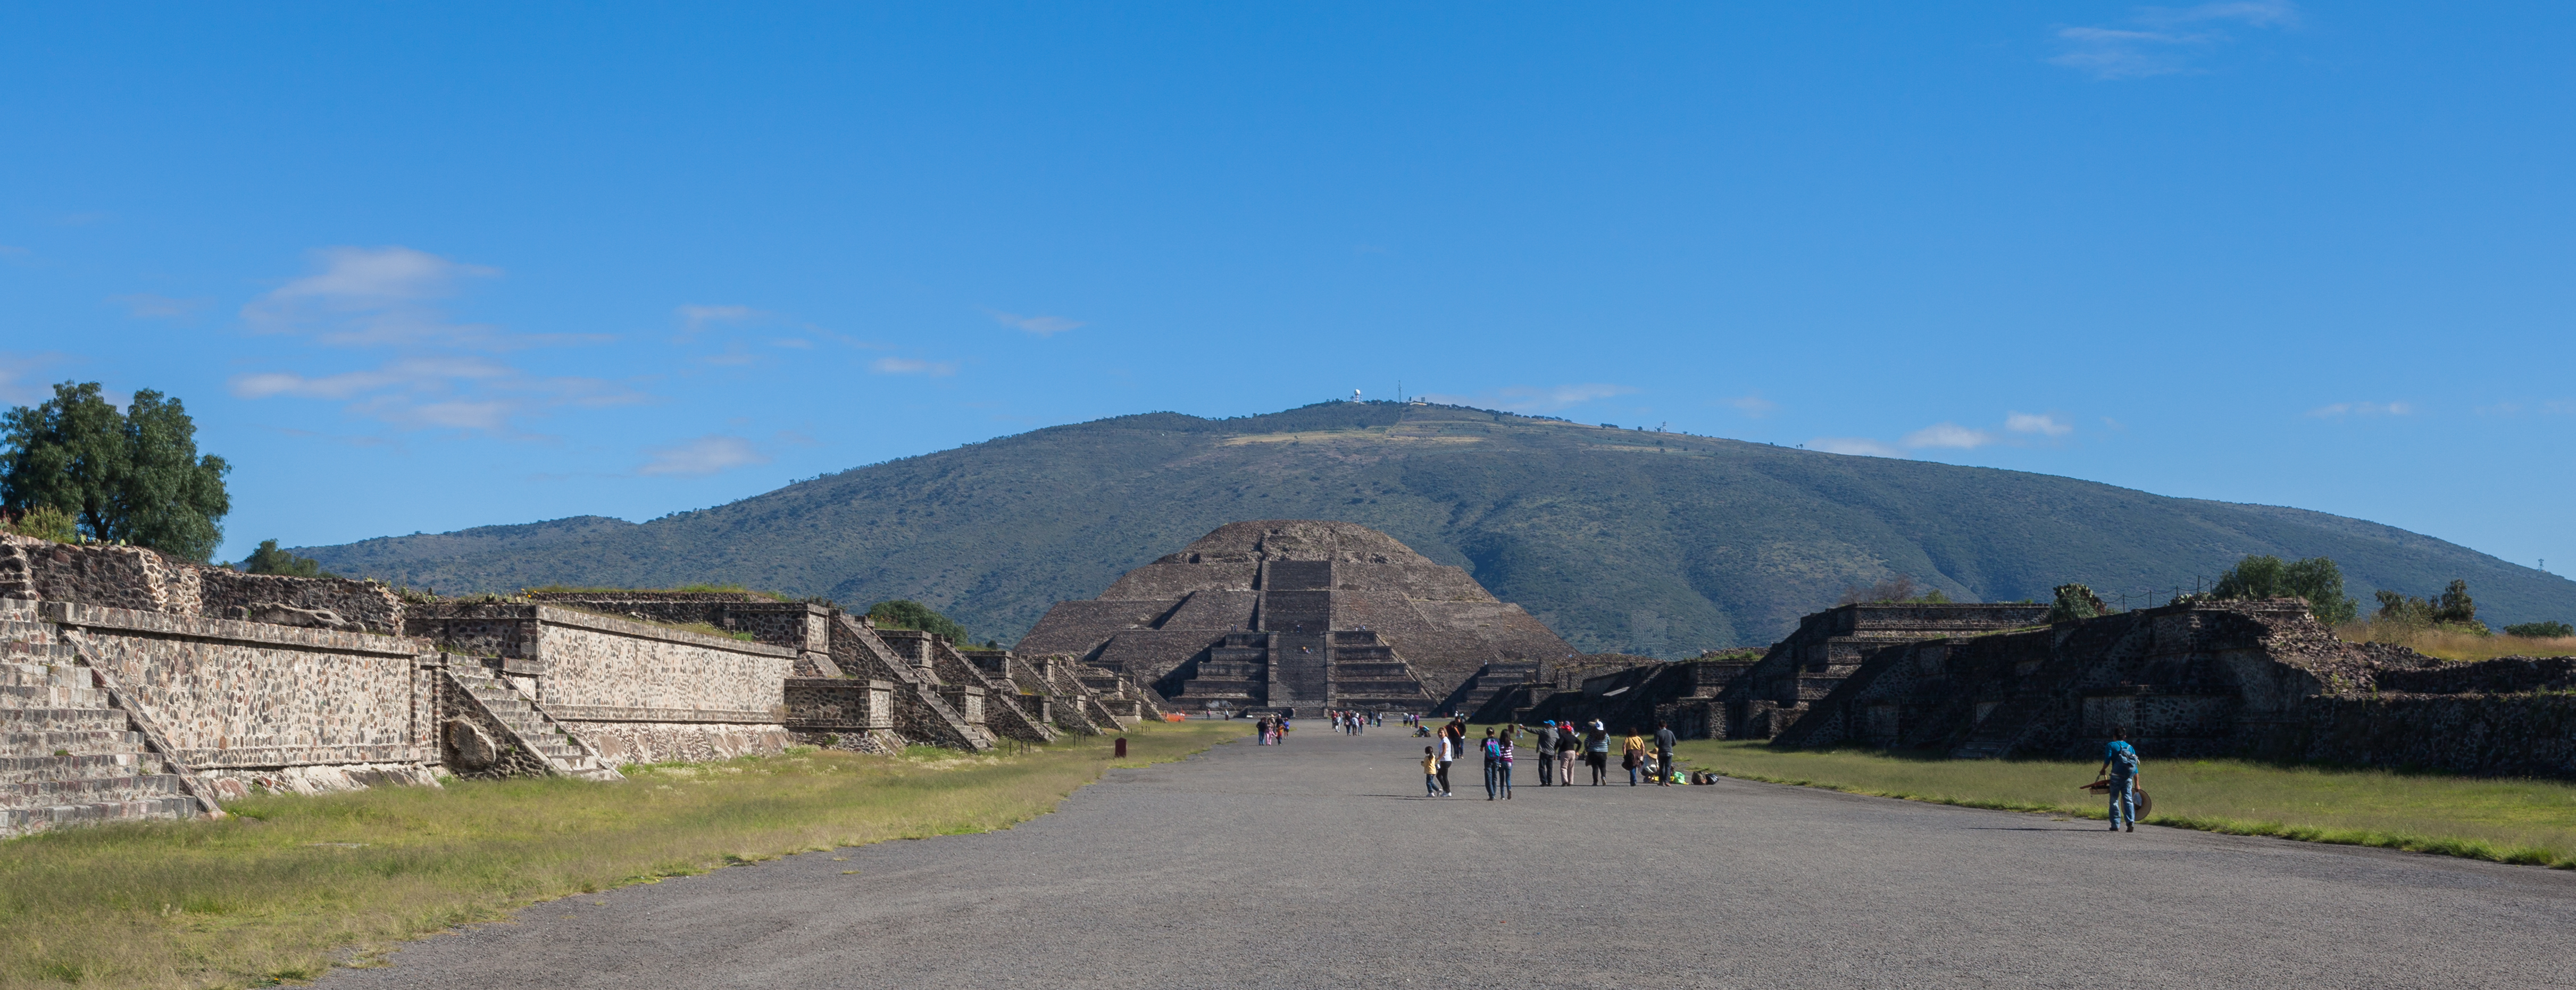 Teotihuacán, México, 2013-10-13, DD 01